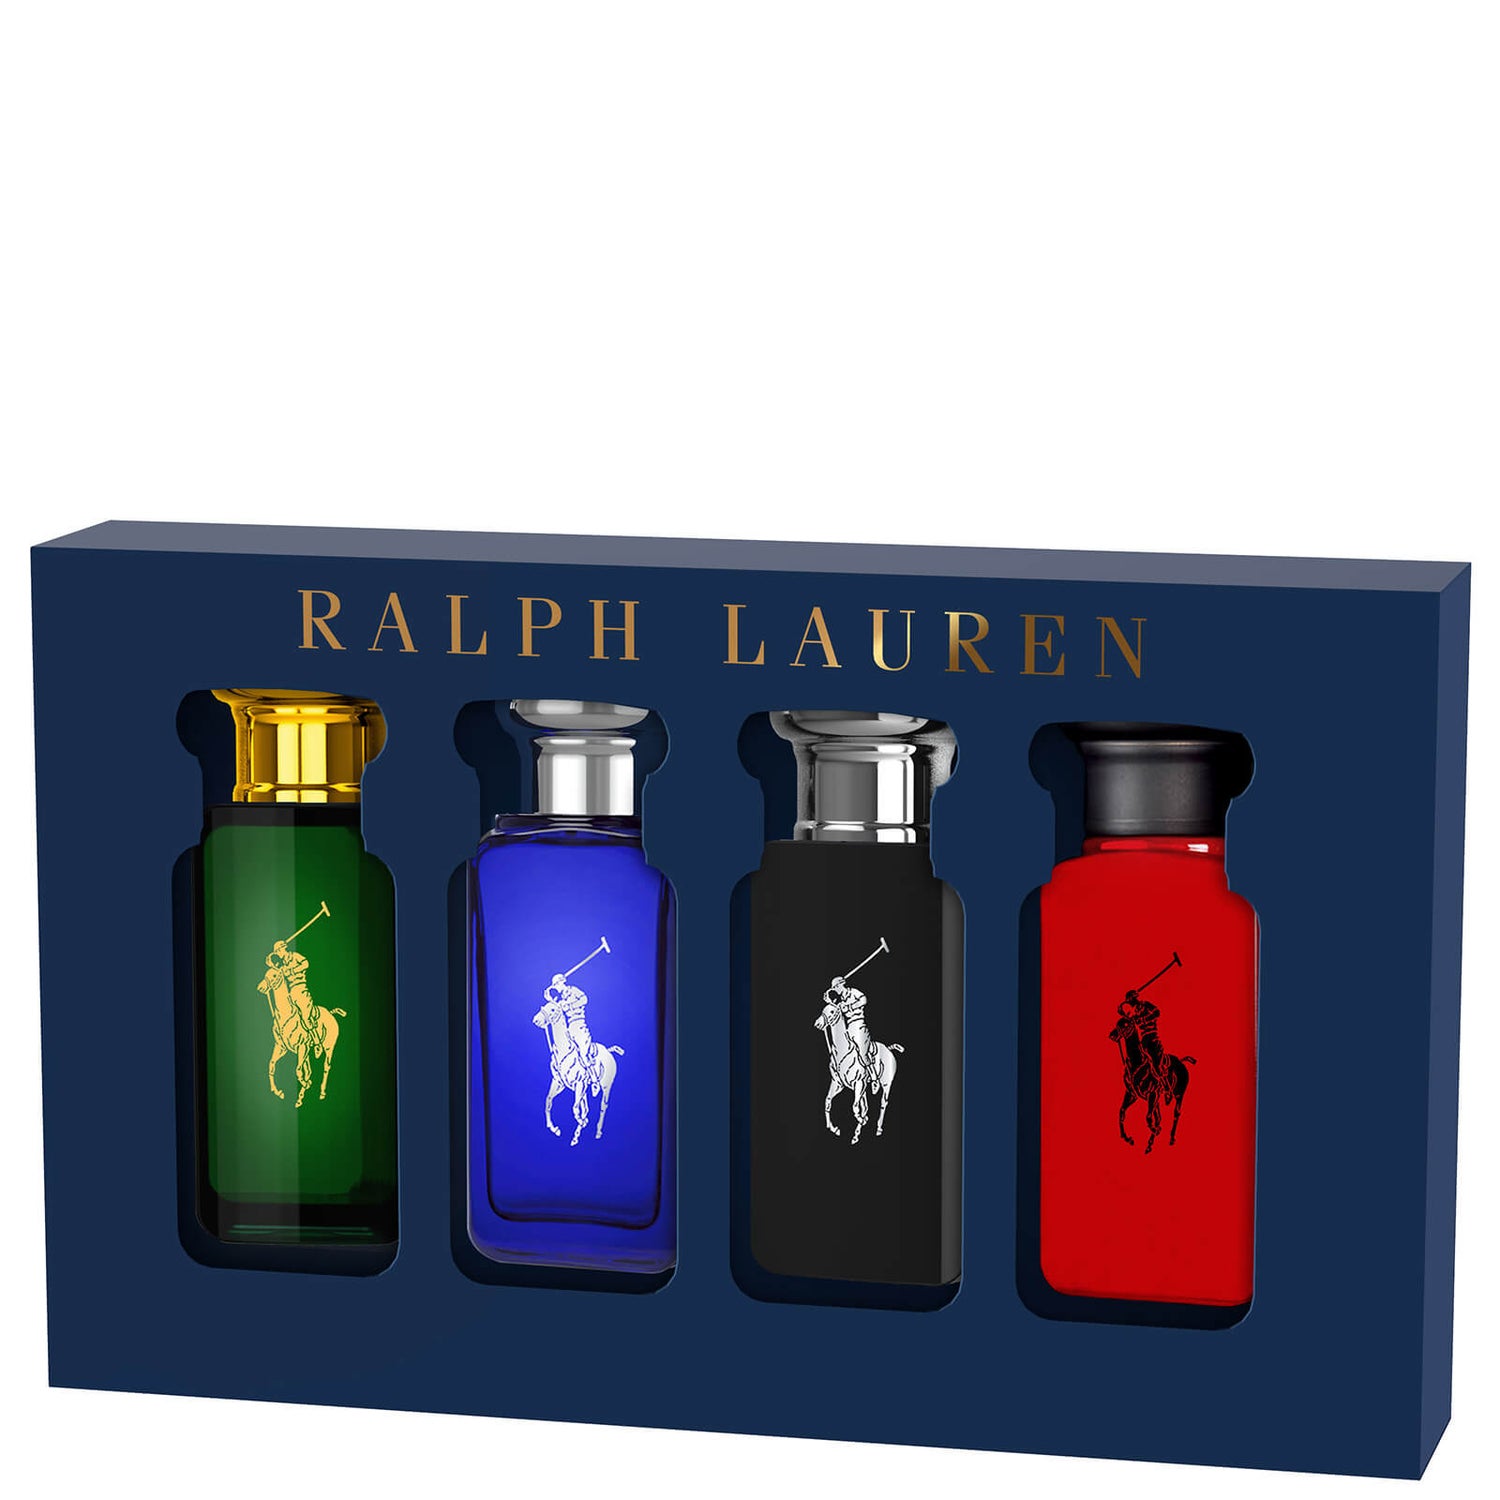 Ralph Lauren World of Polo Collectie Eau de Toilette 4 x 30ml Geschenkset (t.w.v. €60,00)